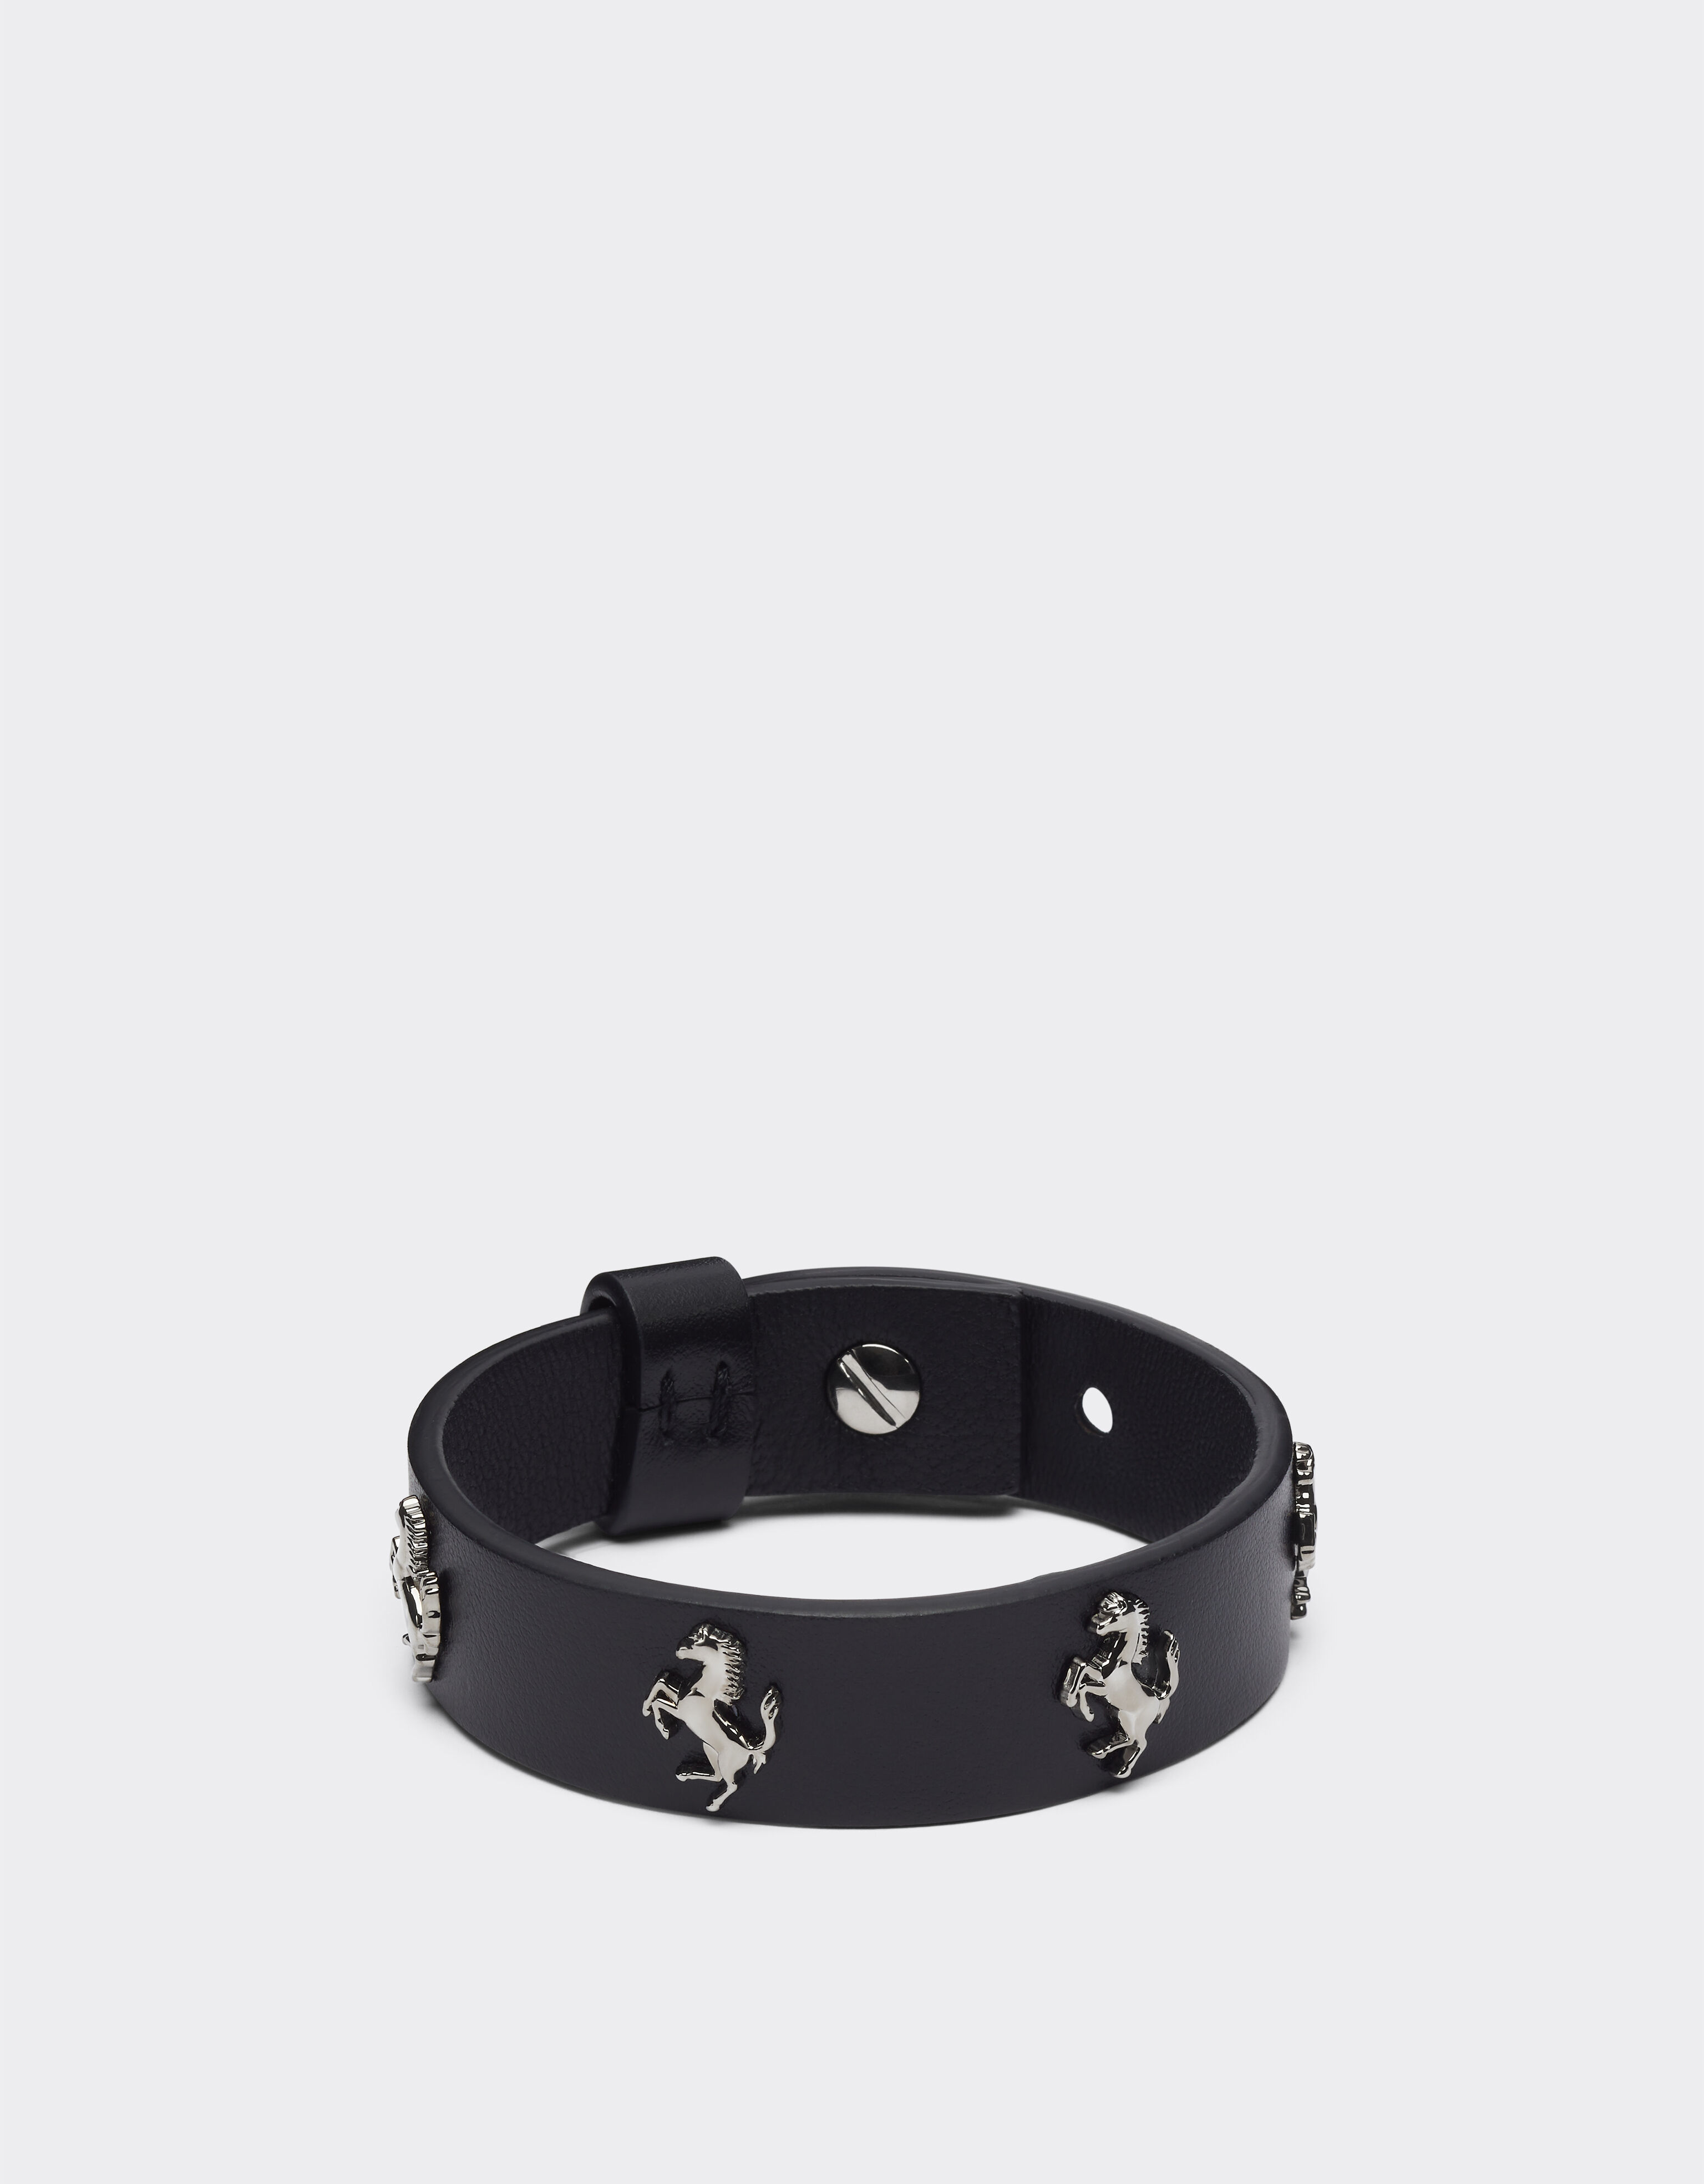 Ferrari Black leather bracelet with studs Black 47427f